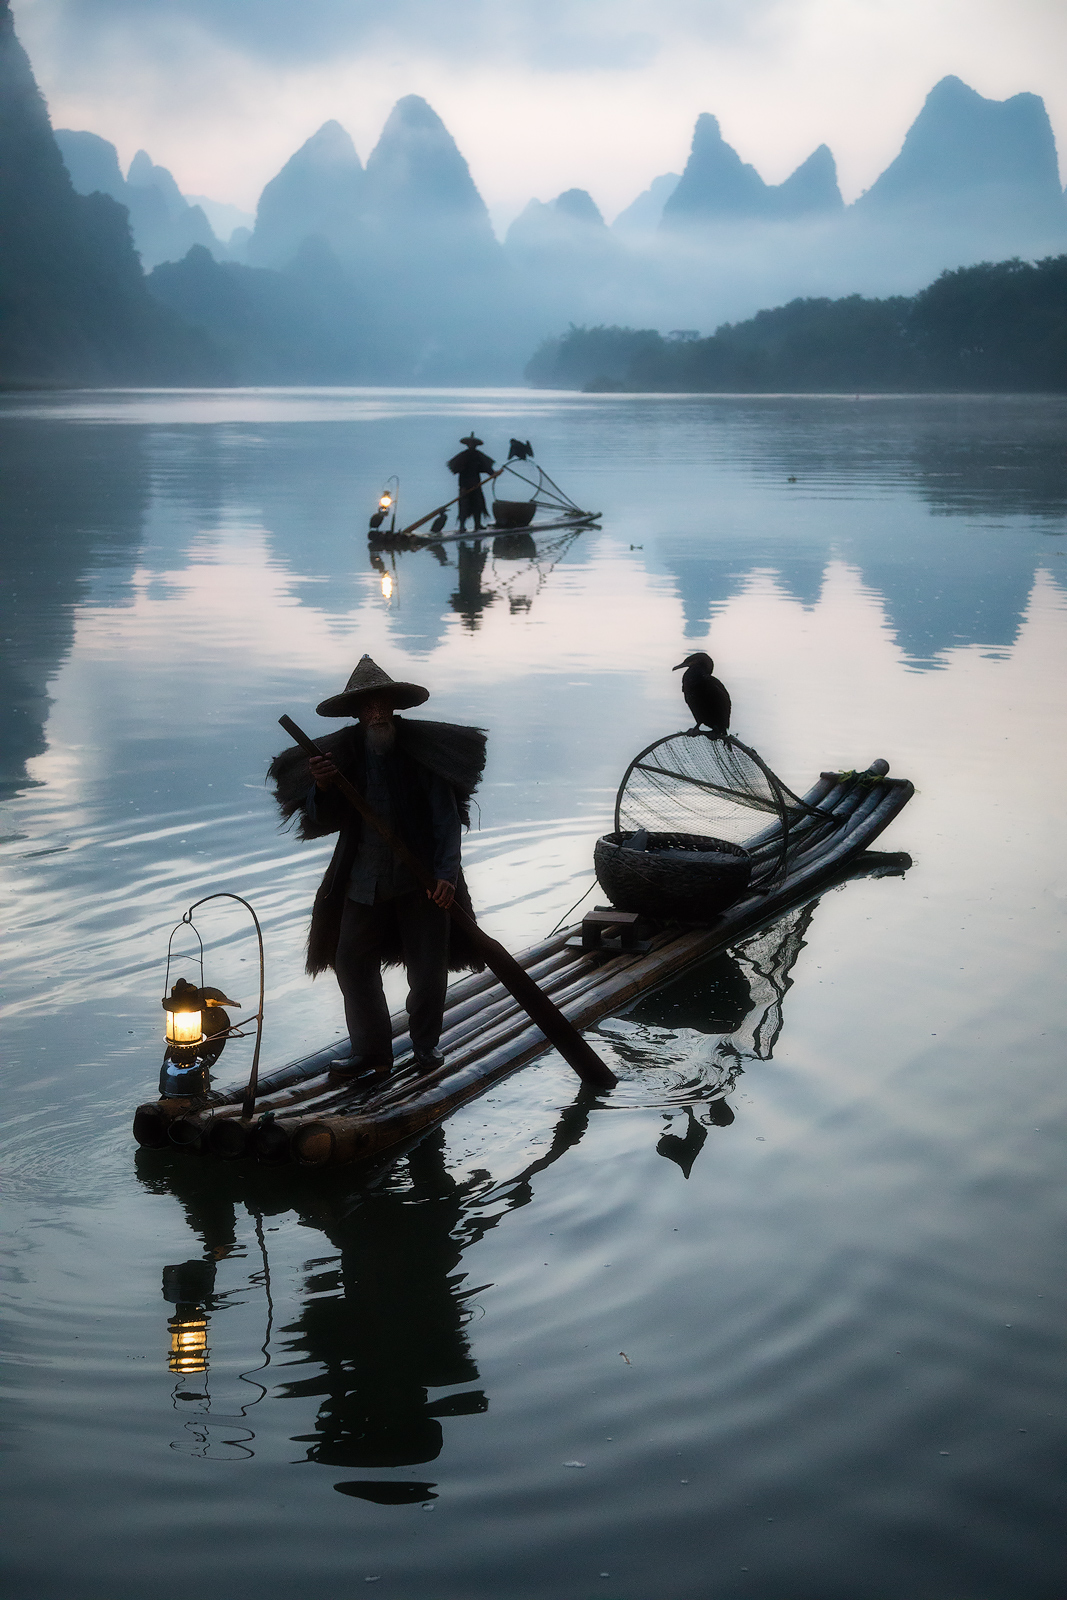 Cormorant fisherman rafting on the Li in the early morning.